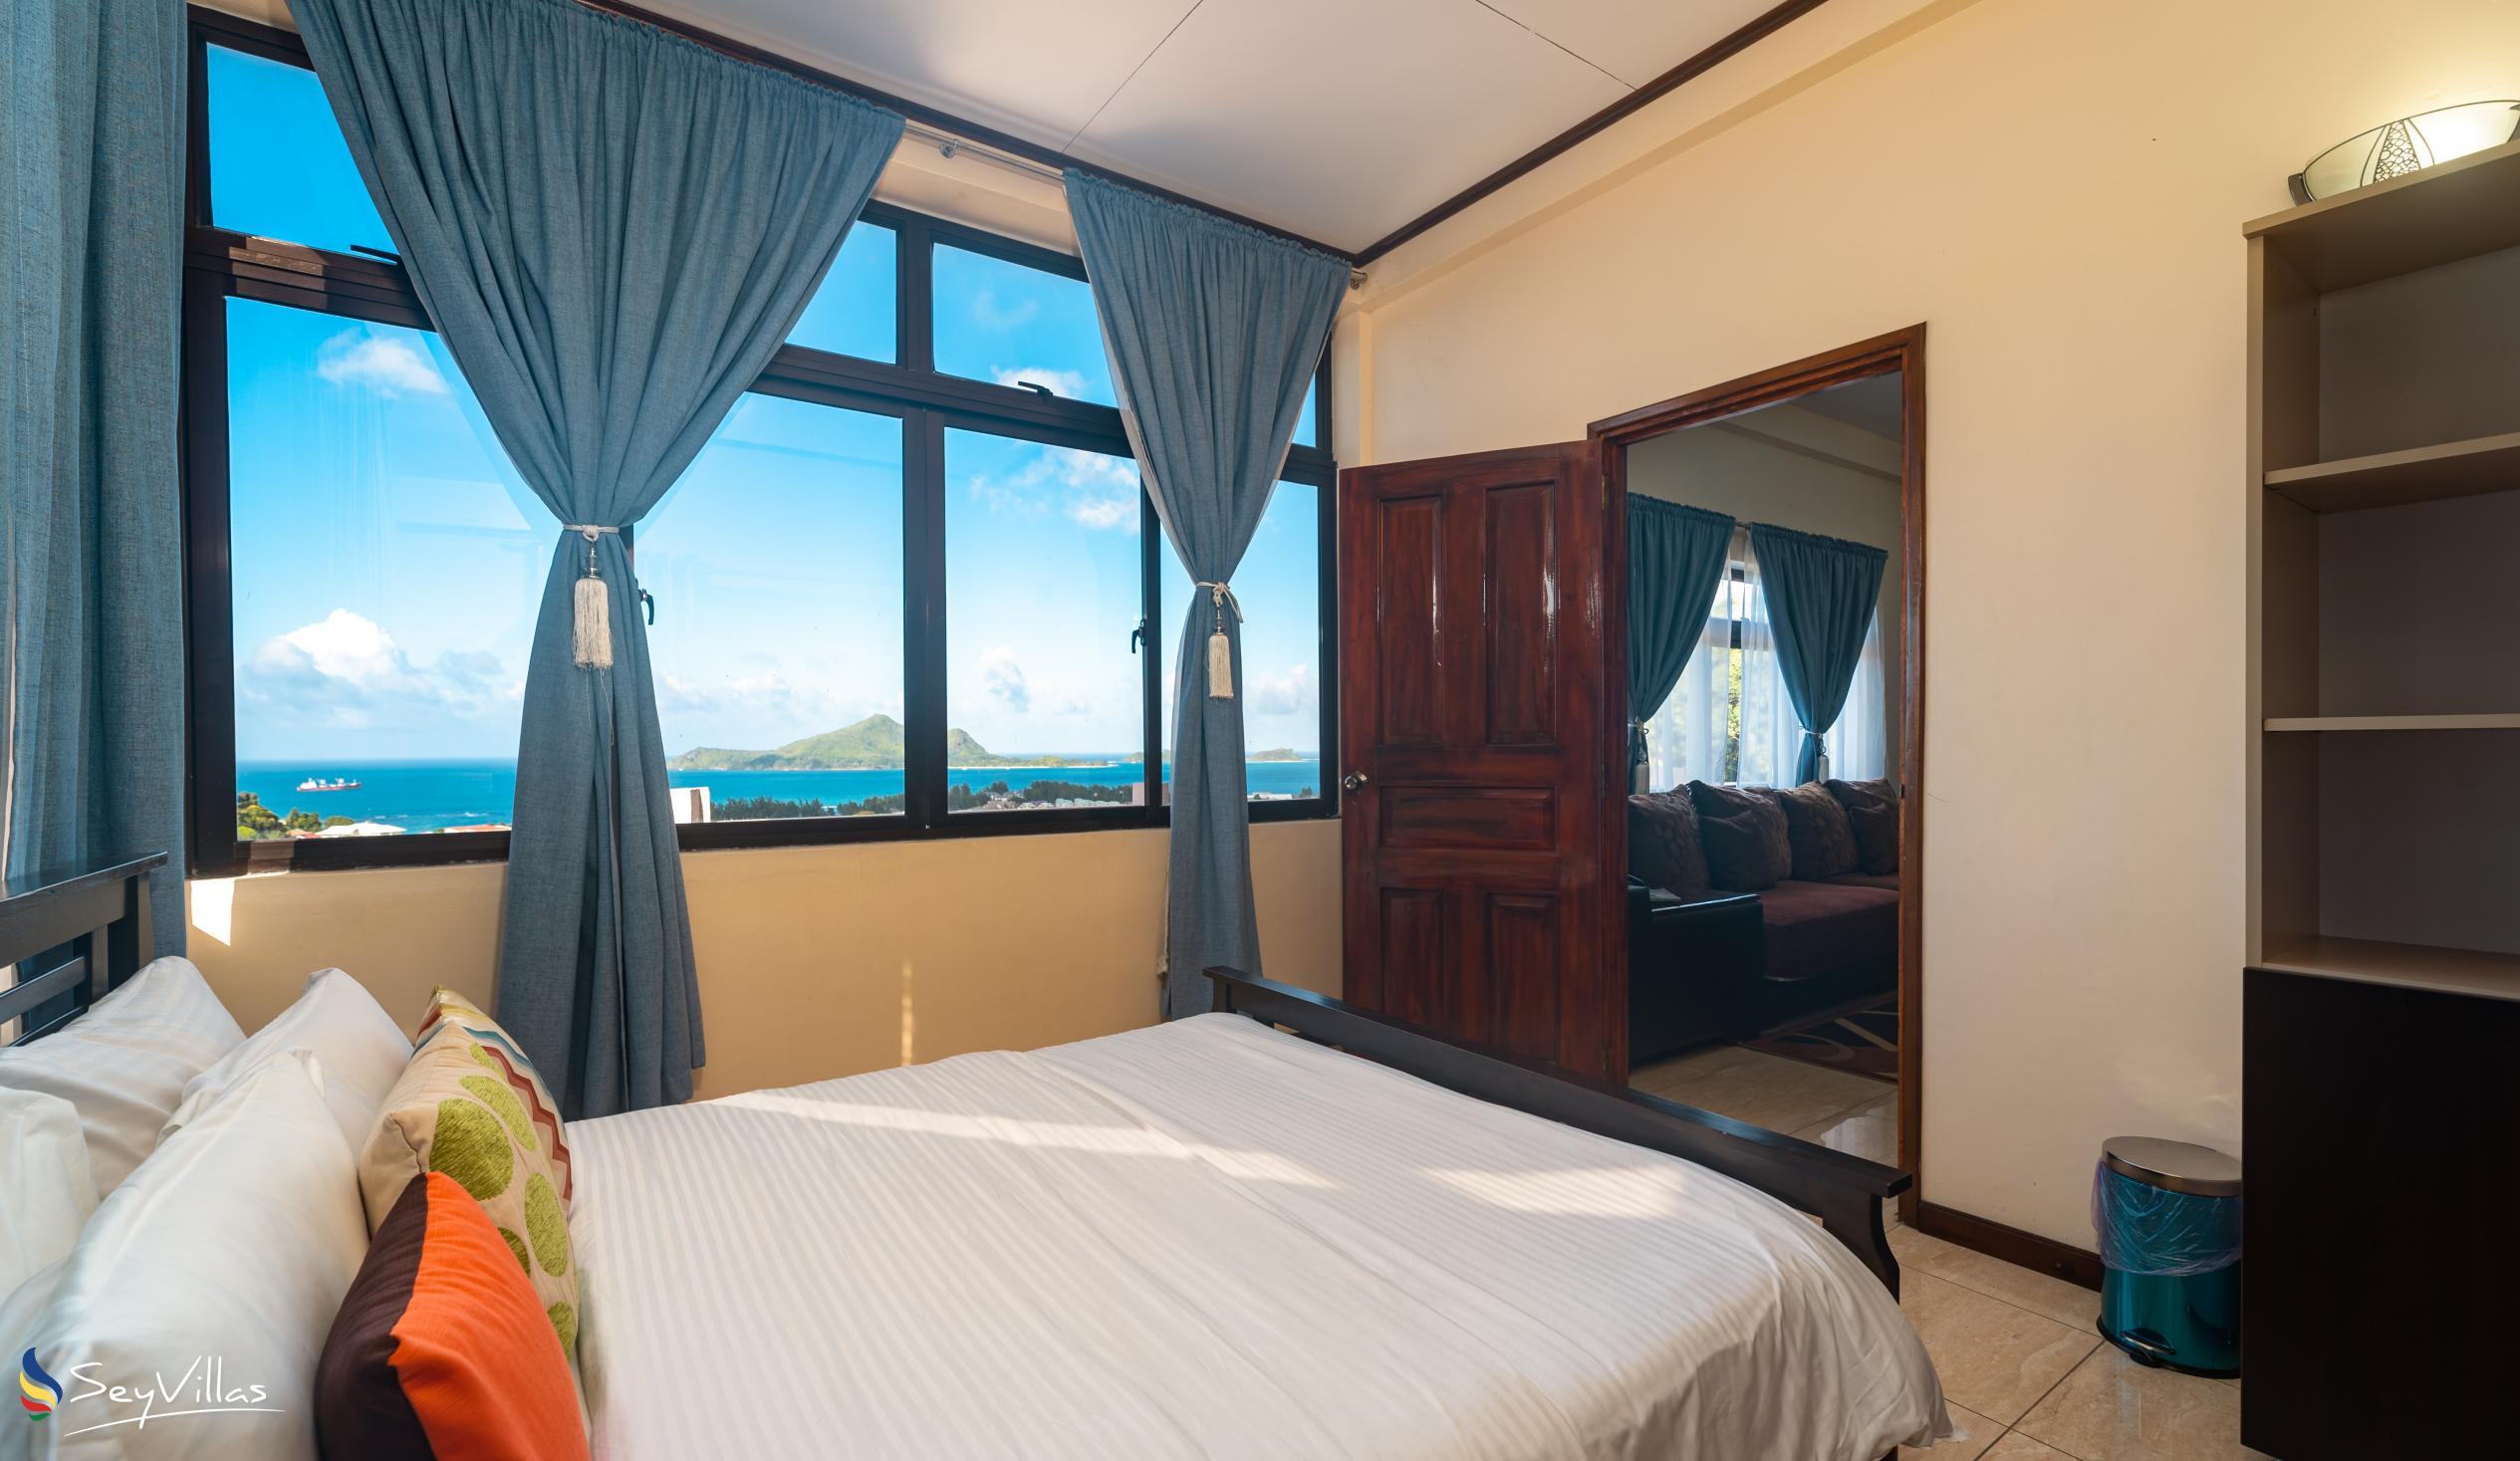 Photo 105: Maison L'Horizon - 3-Bedroom Apartment Lorizon - Mahé (Seychelles)